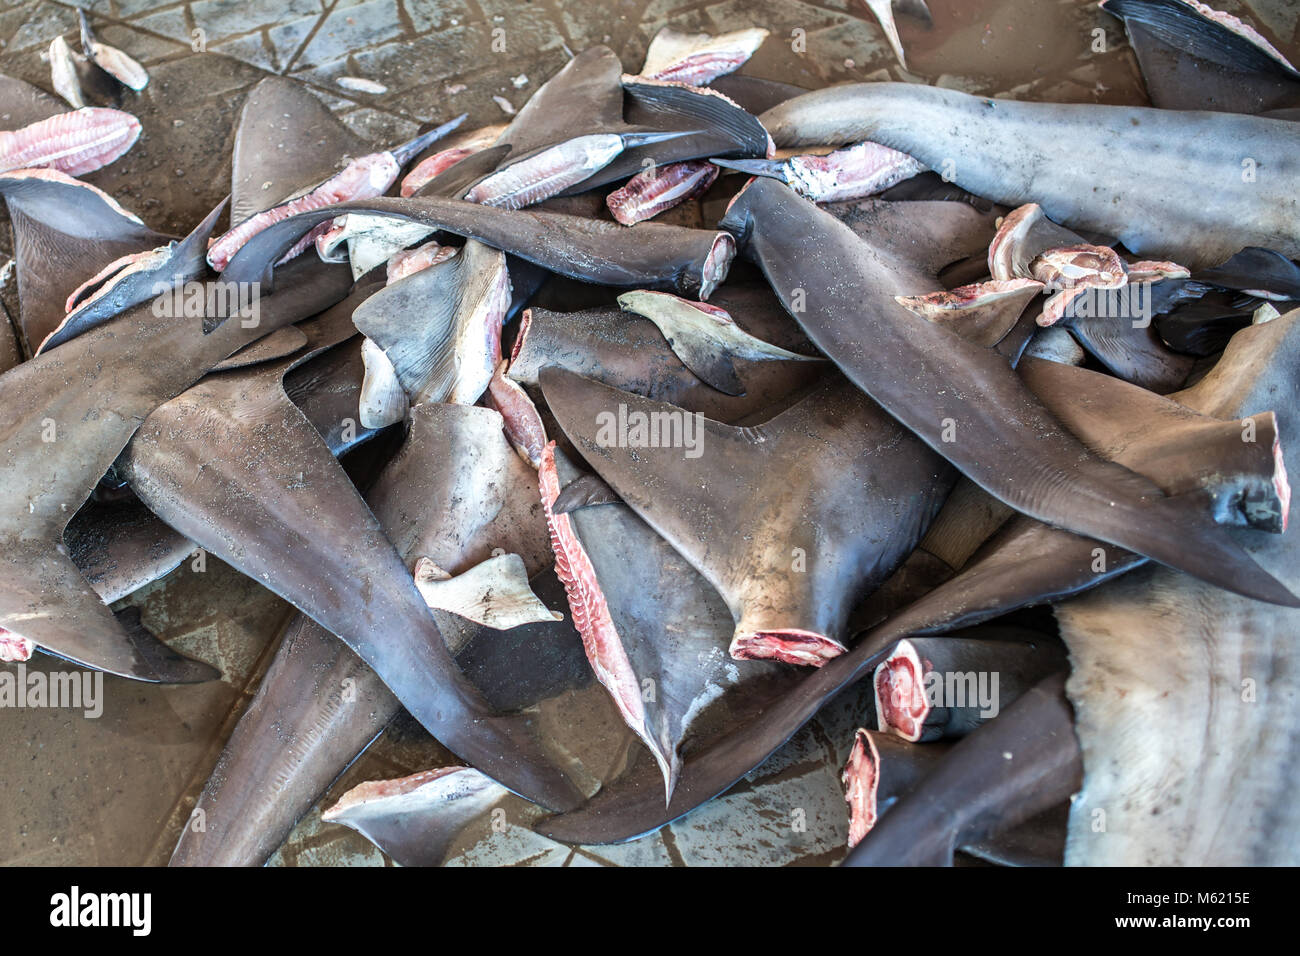 Shark Fins, endangered species Stock Photo